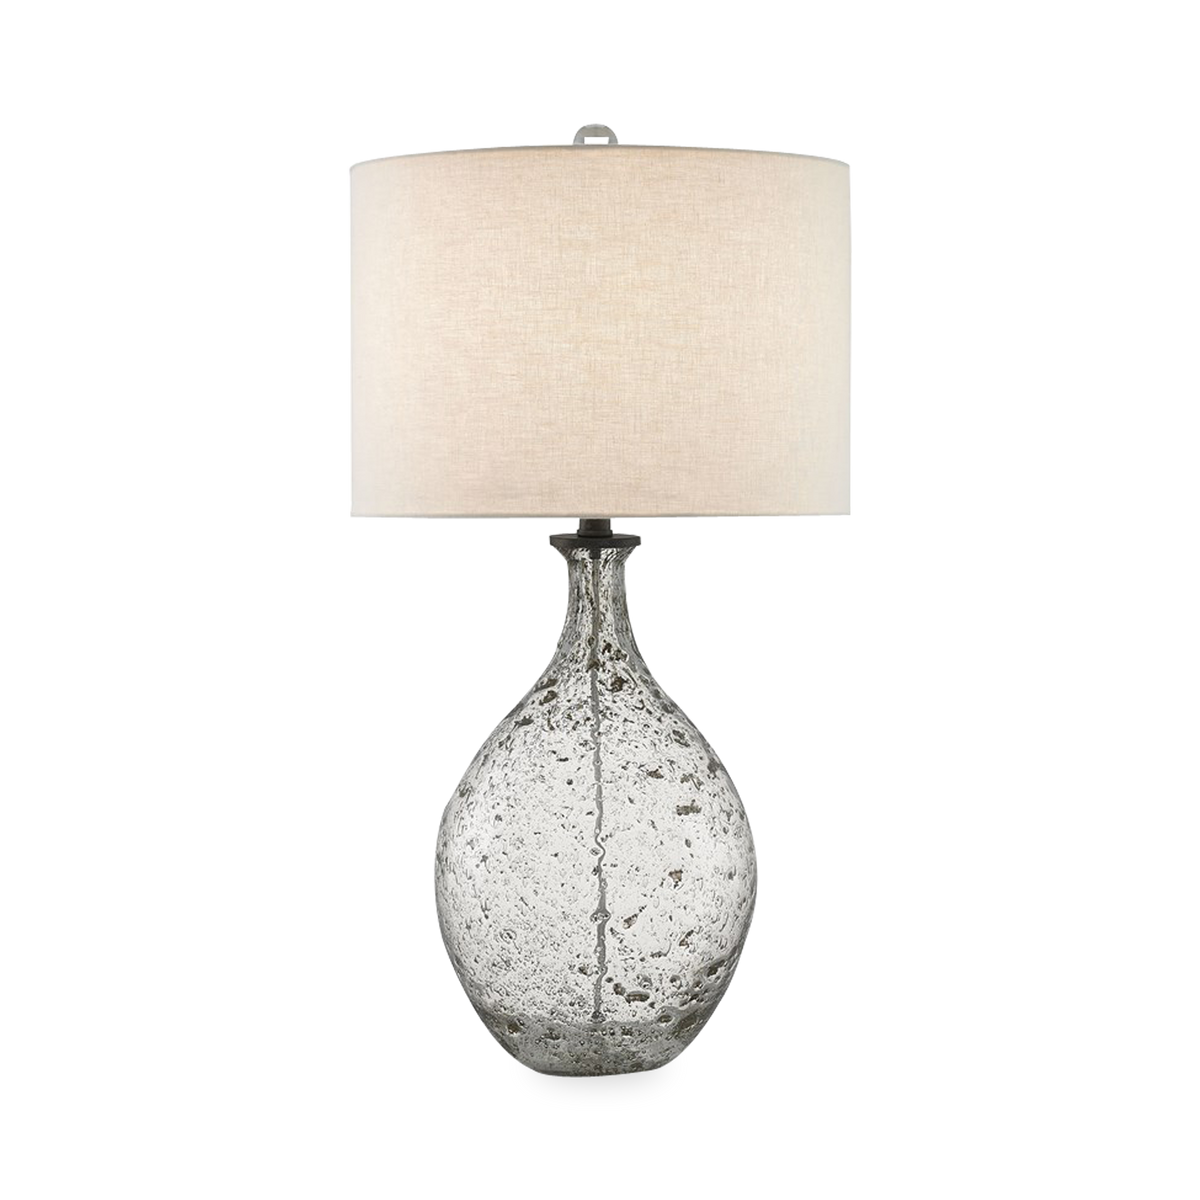 Haskin Table Lamp